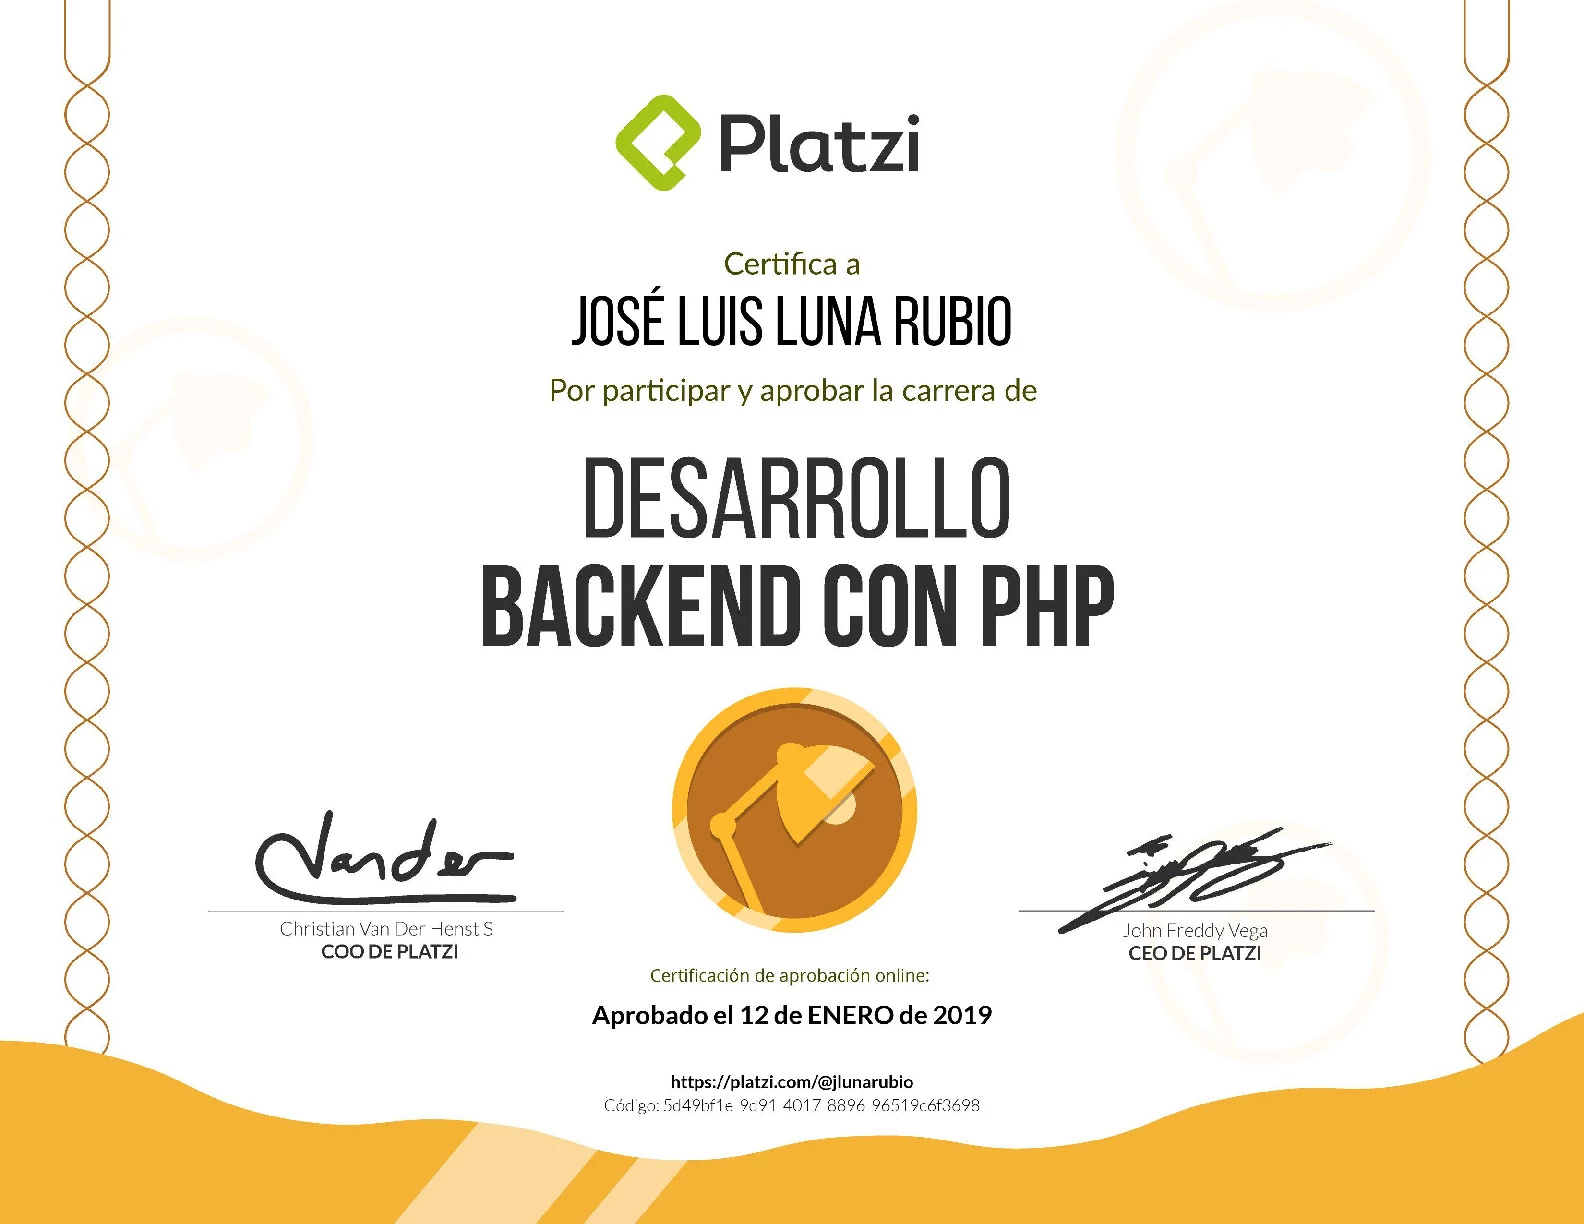 Carrera Platzi Jose Luis Luna Rubio - Desarrollo Backend con PHP